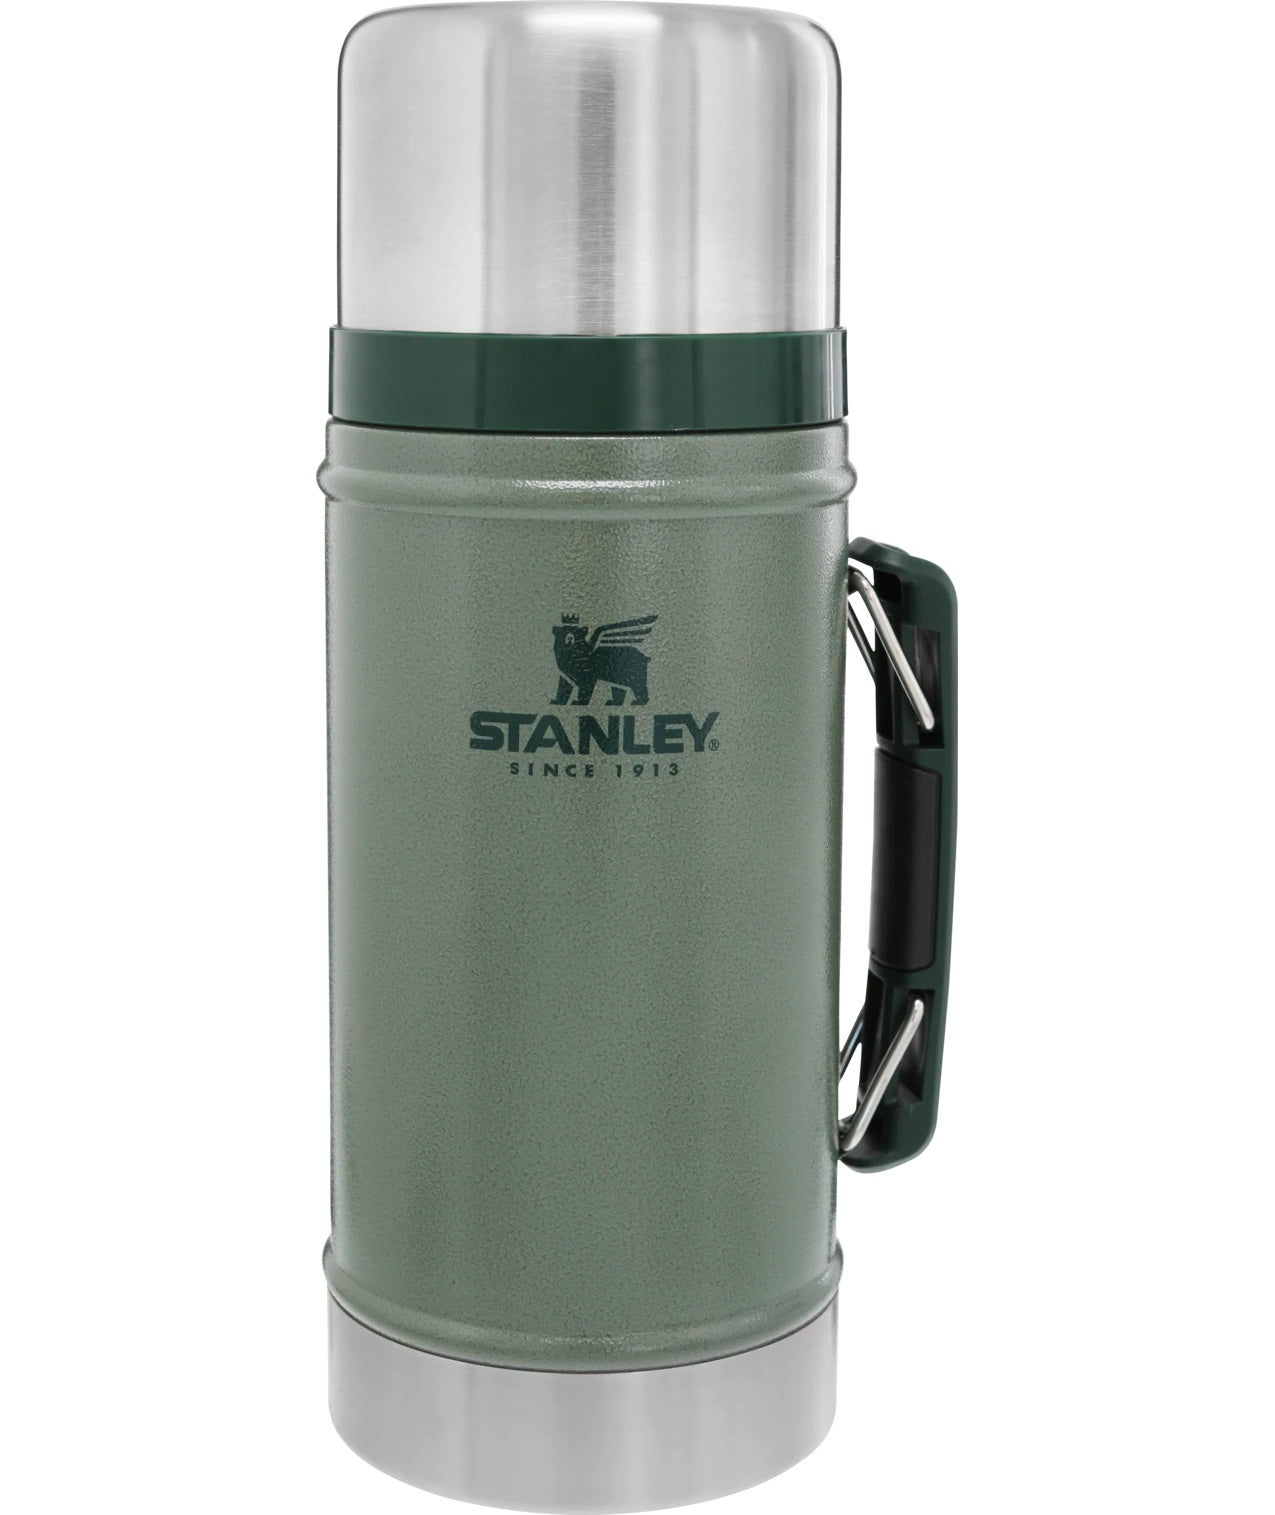 Stanley Master Vacuum Bottle 1.4Qt - Foundry Black